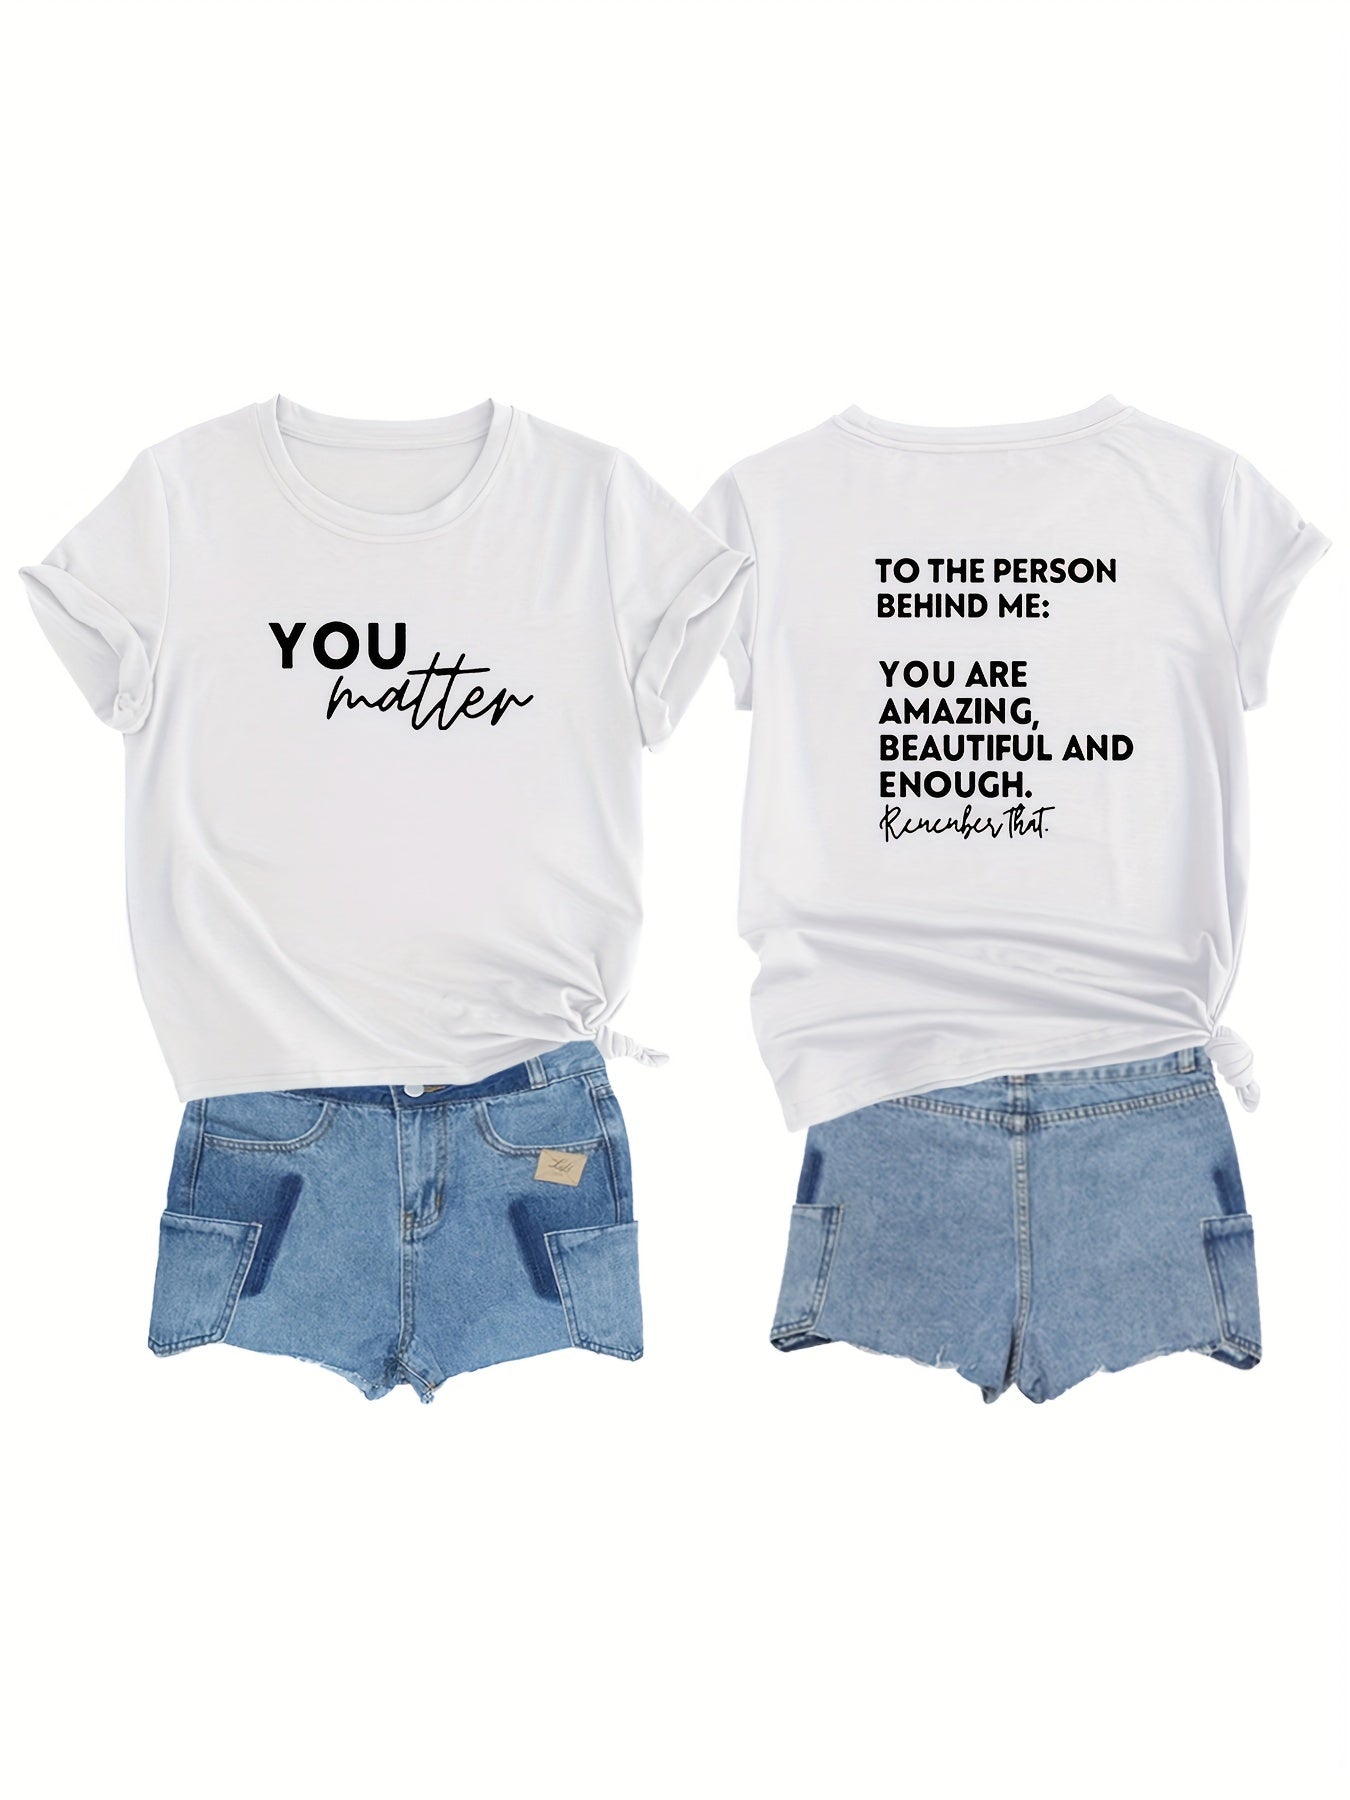 You Matter Plus Size Women's Christian T-shirt claimedbygoddesigns